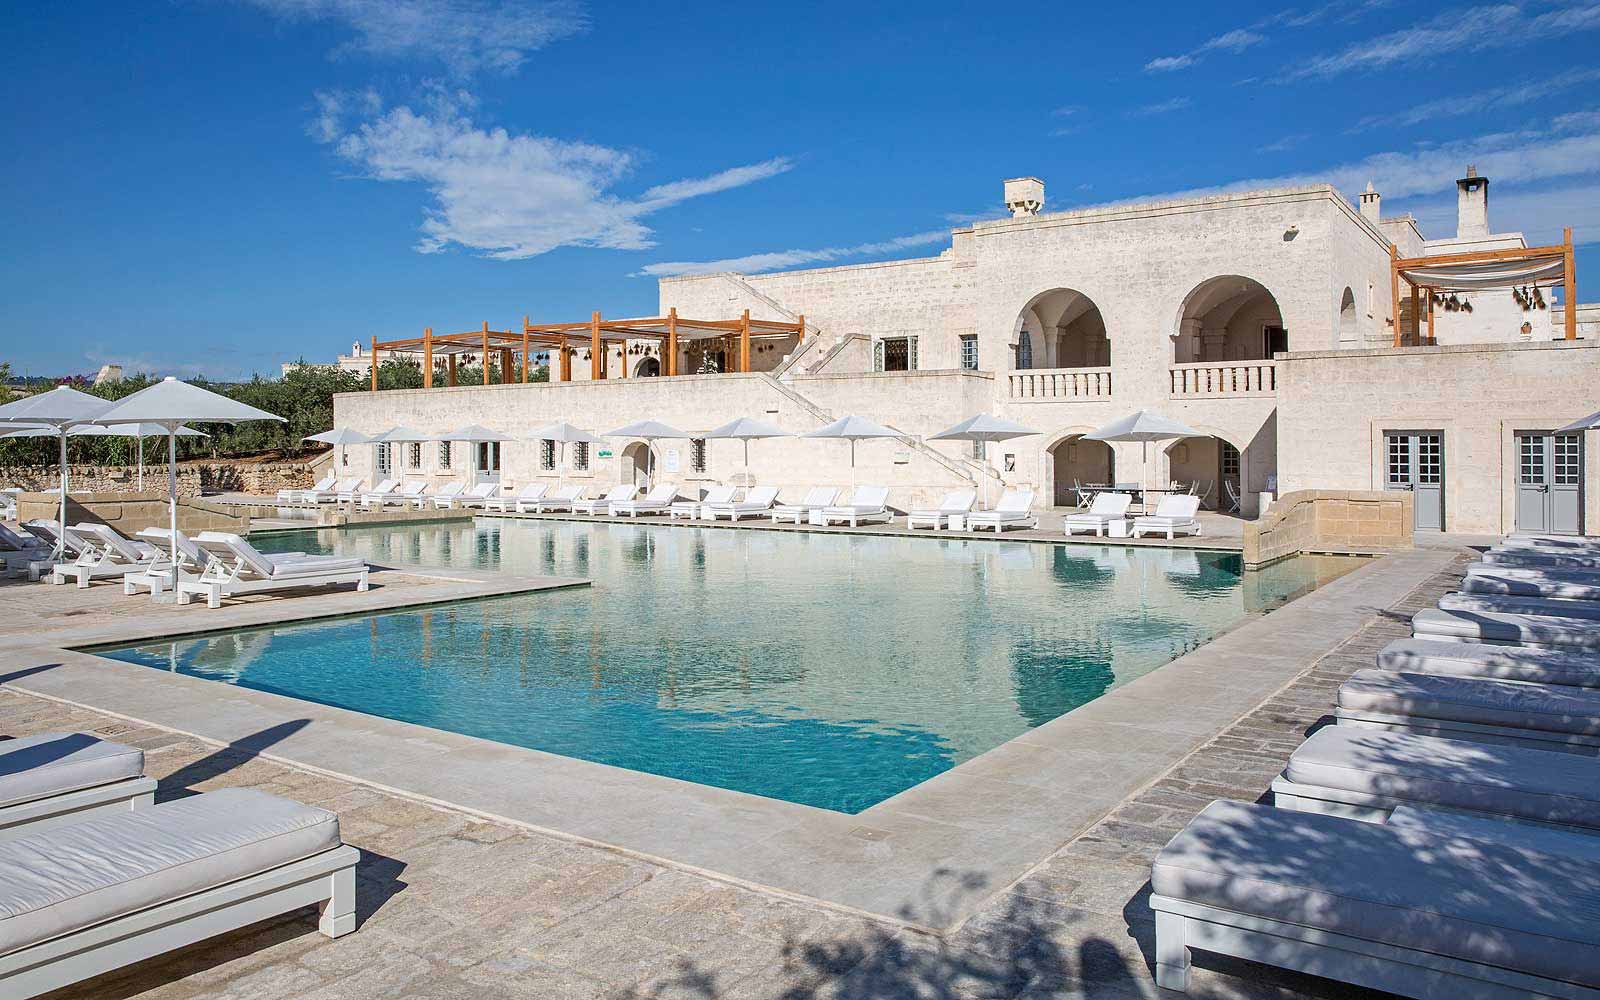 A swimming pool at the Borgo Egnazia